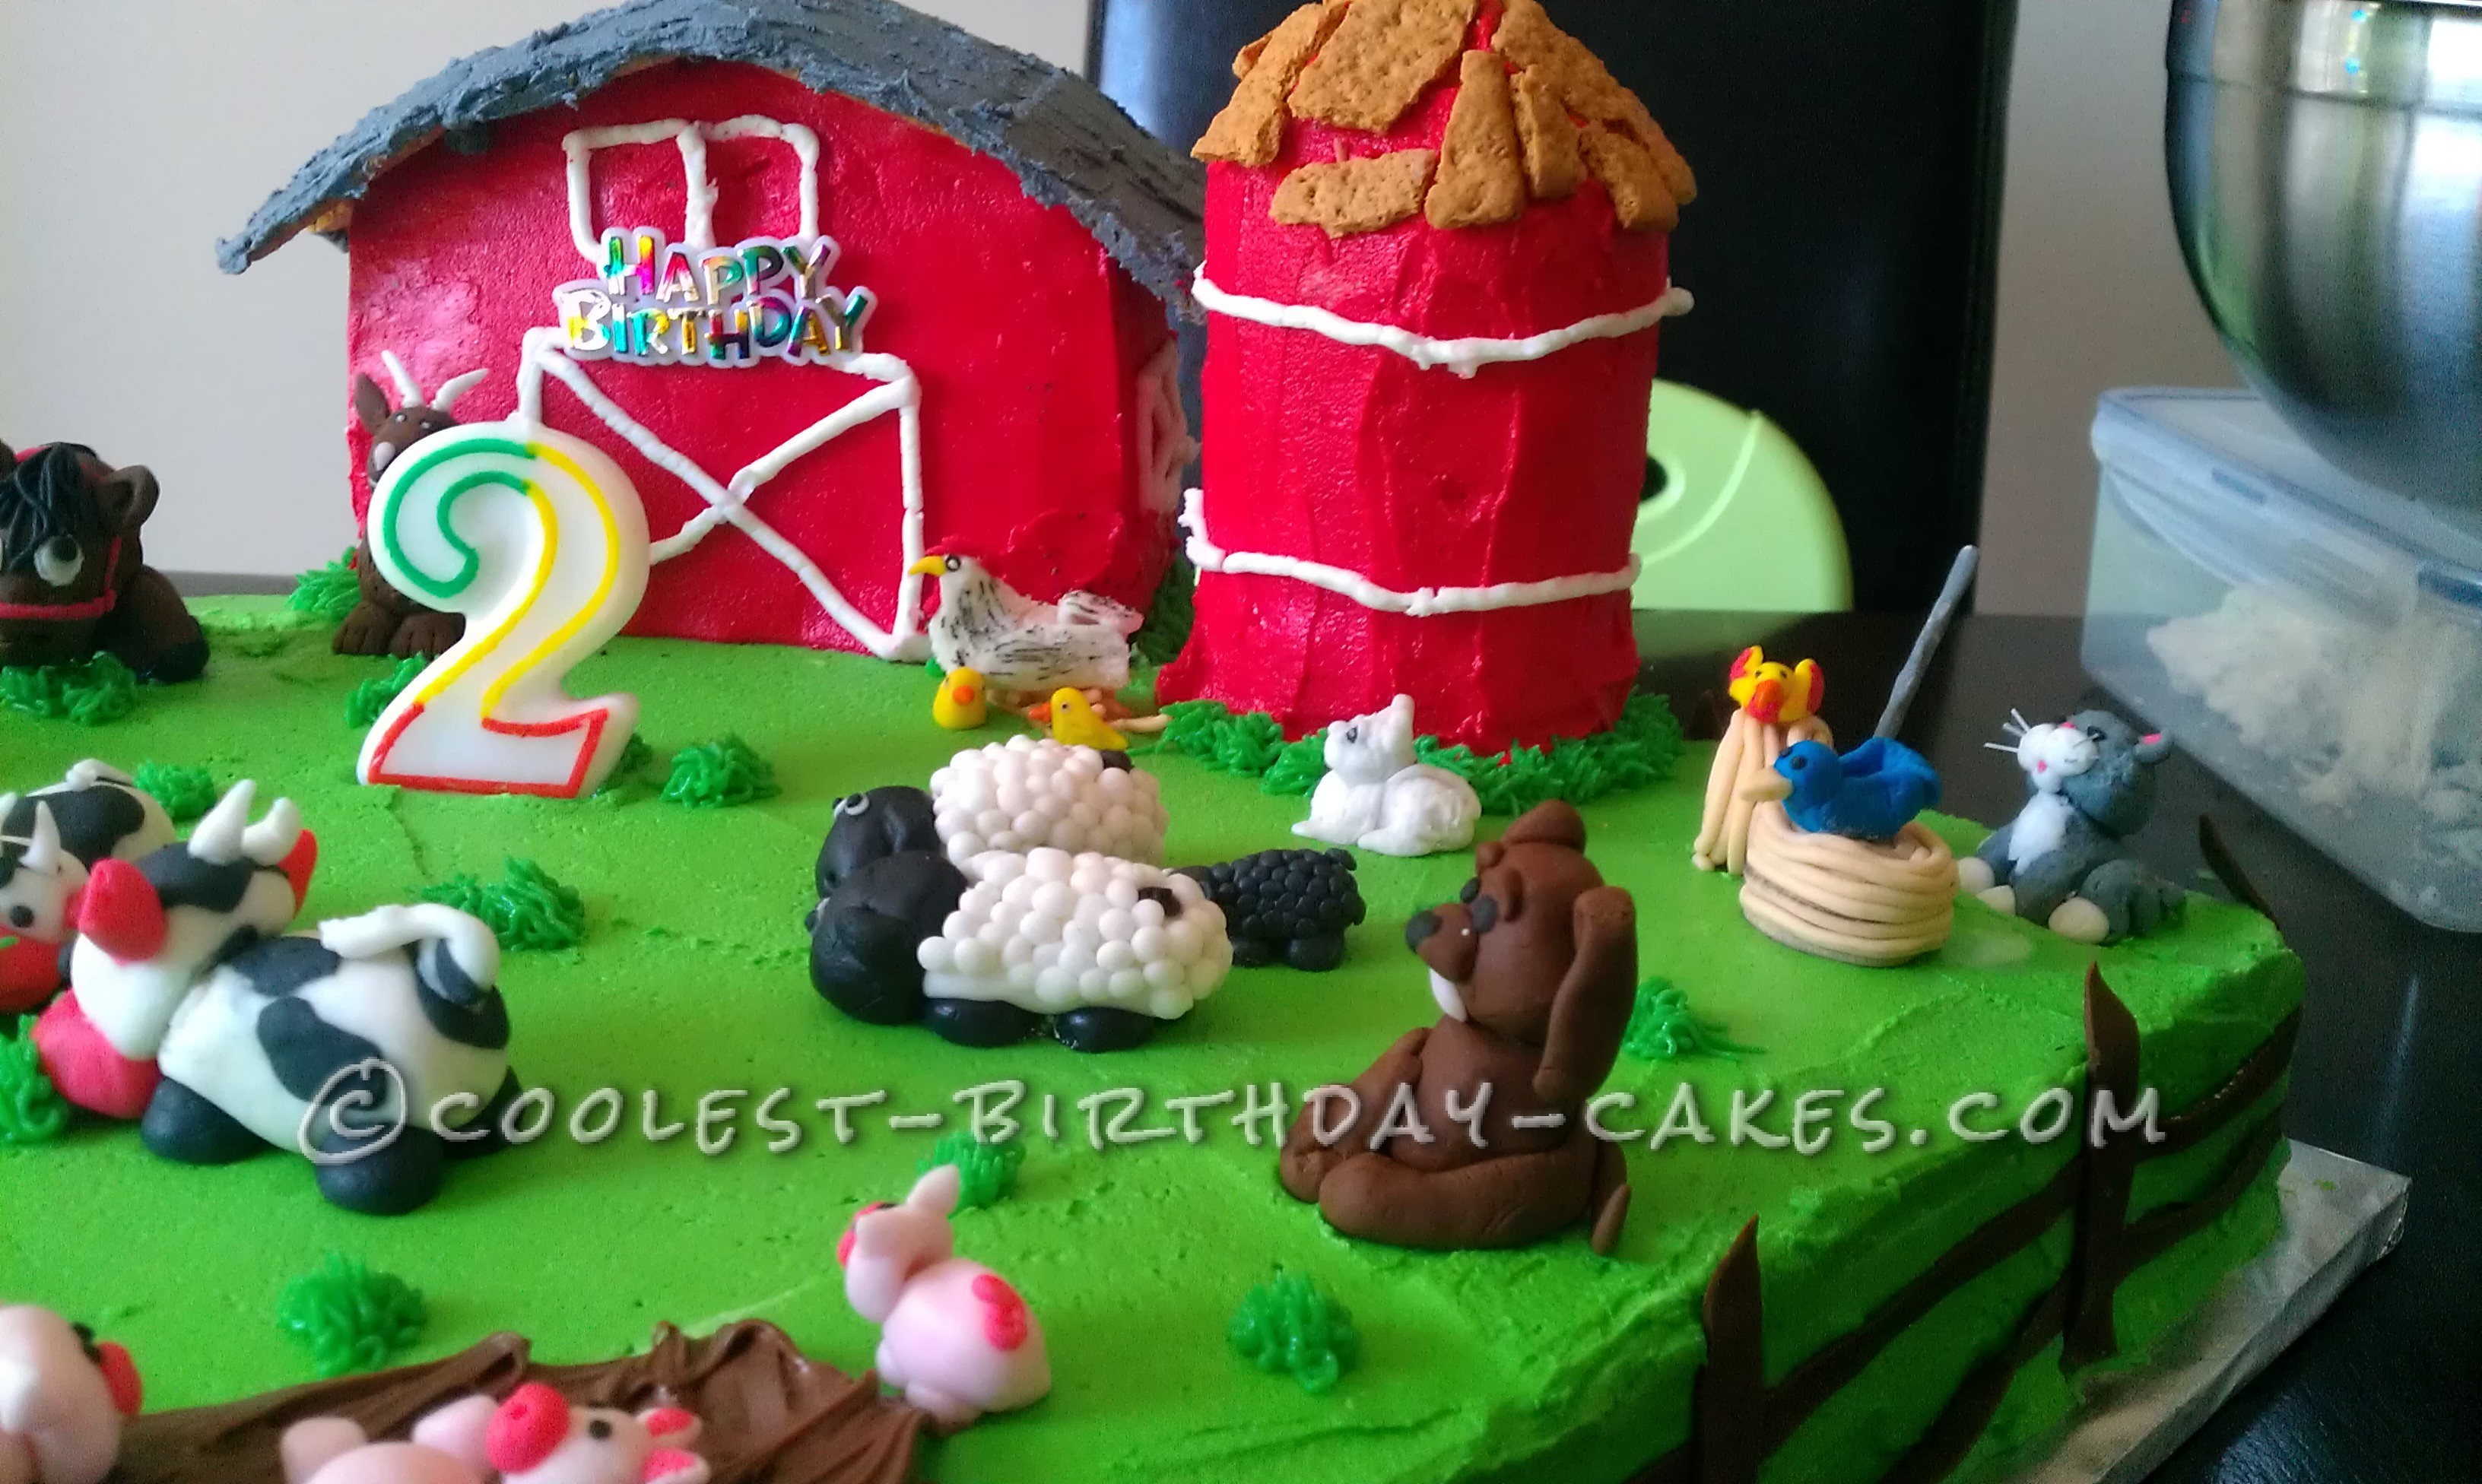 Coolest Farm Scene Birthday Cake